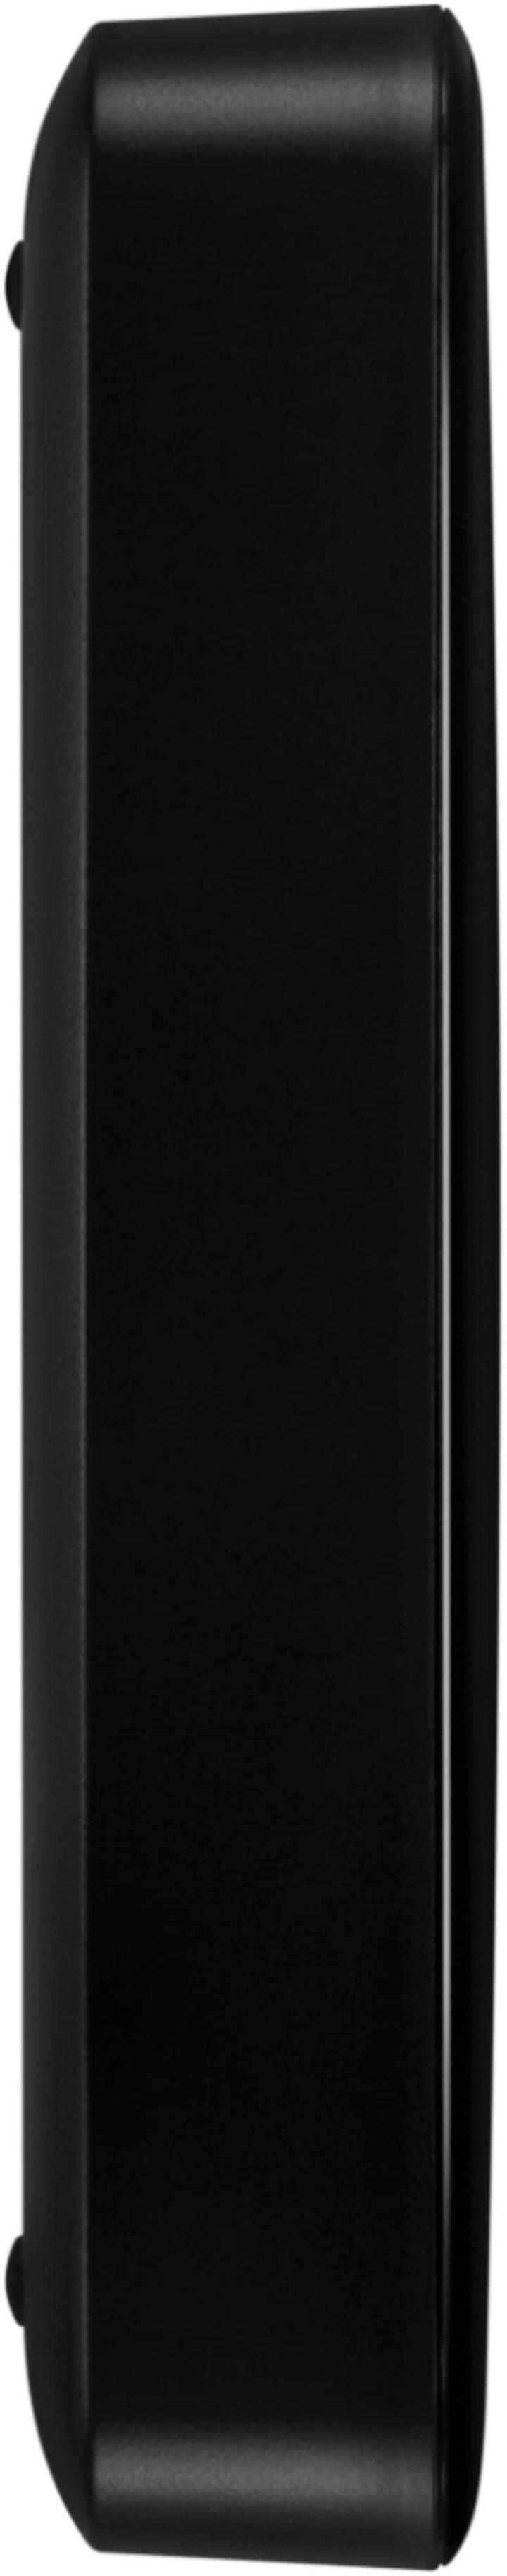 WD - Easystore 4TB External USB 3.0 Portable Hard Drive - Black_6